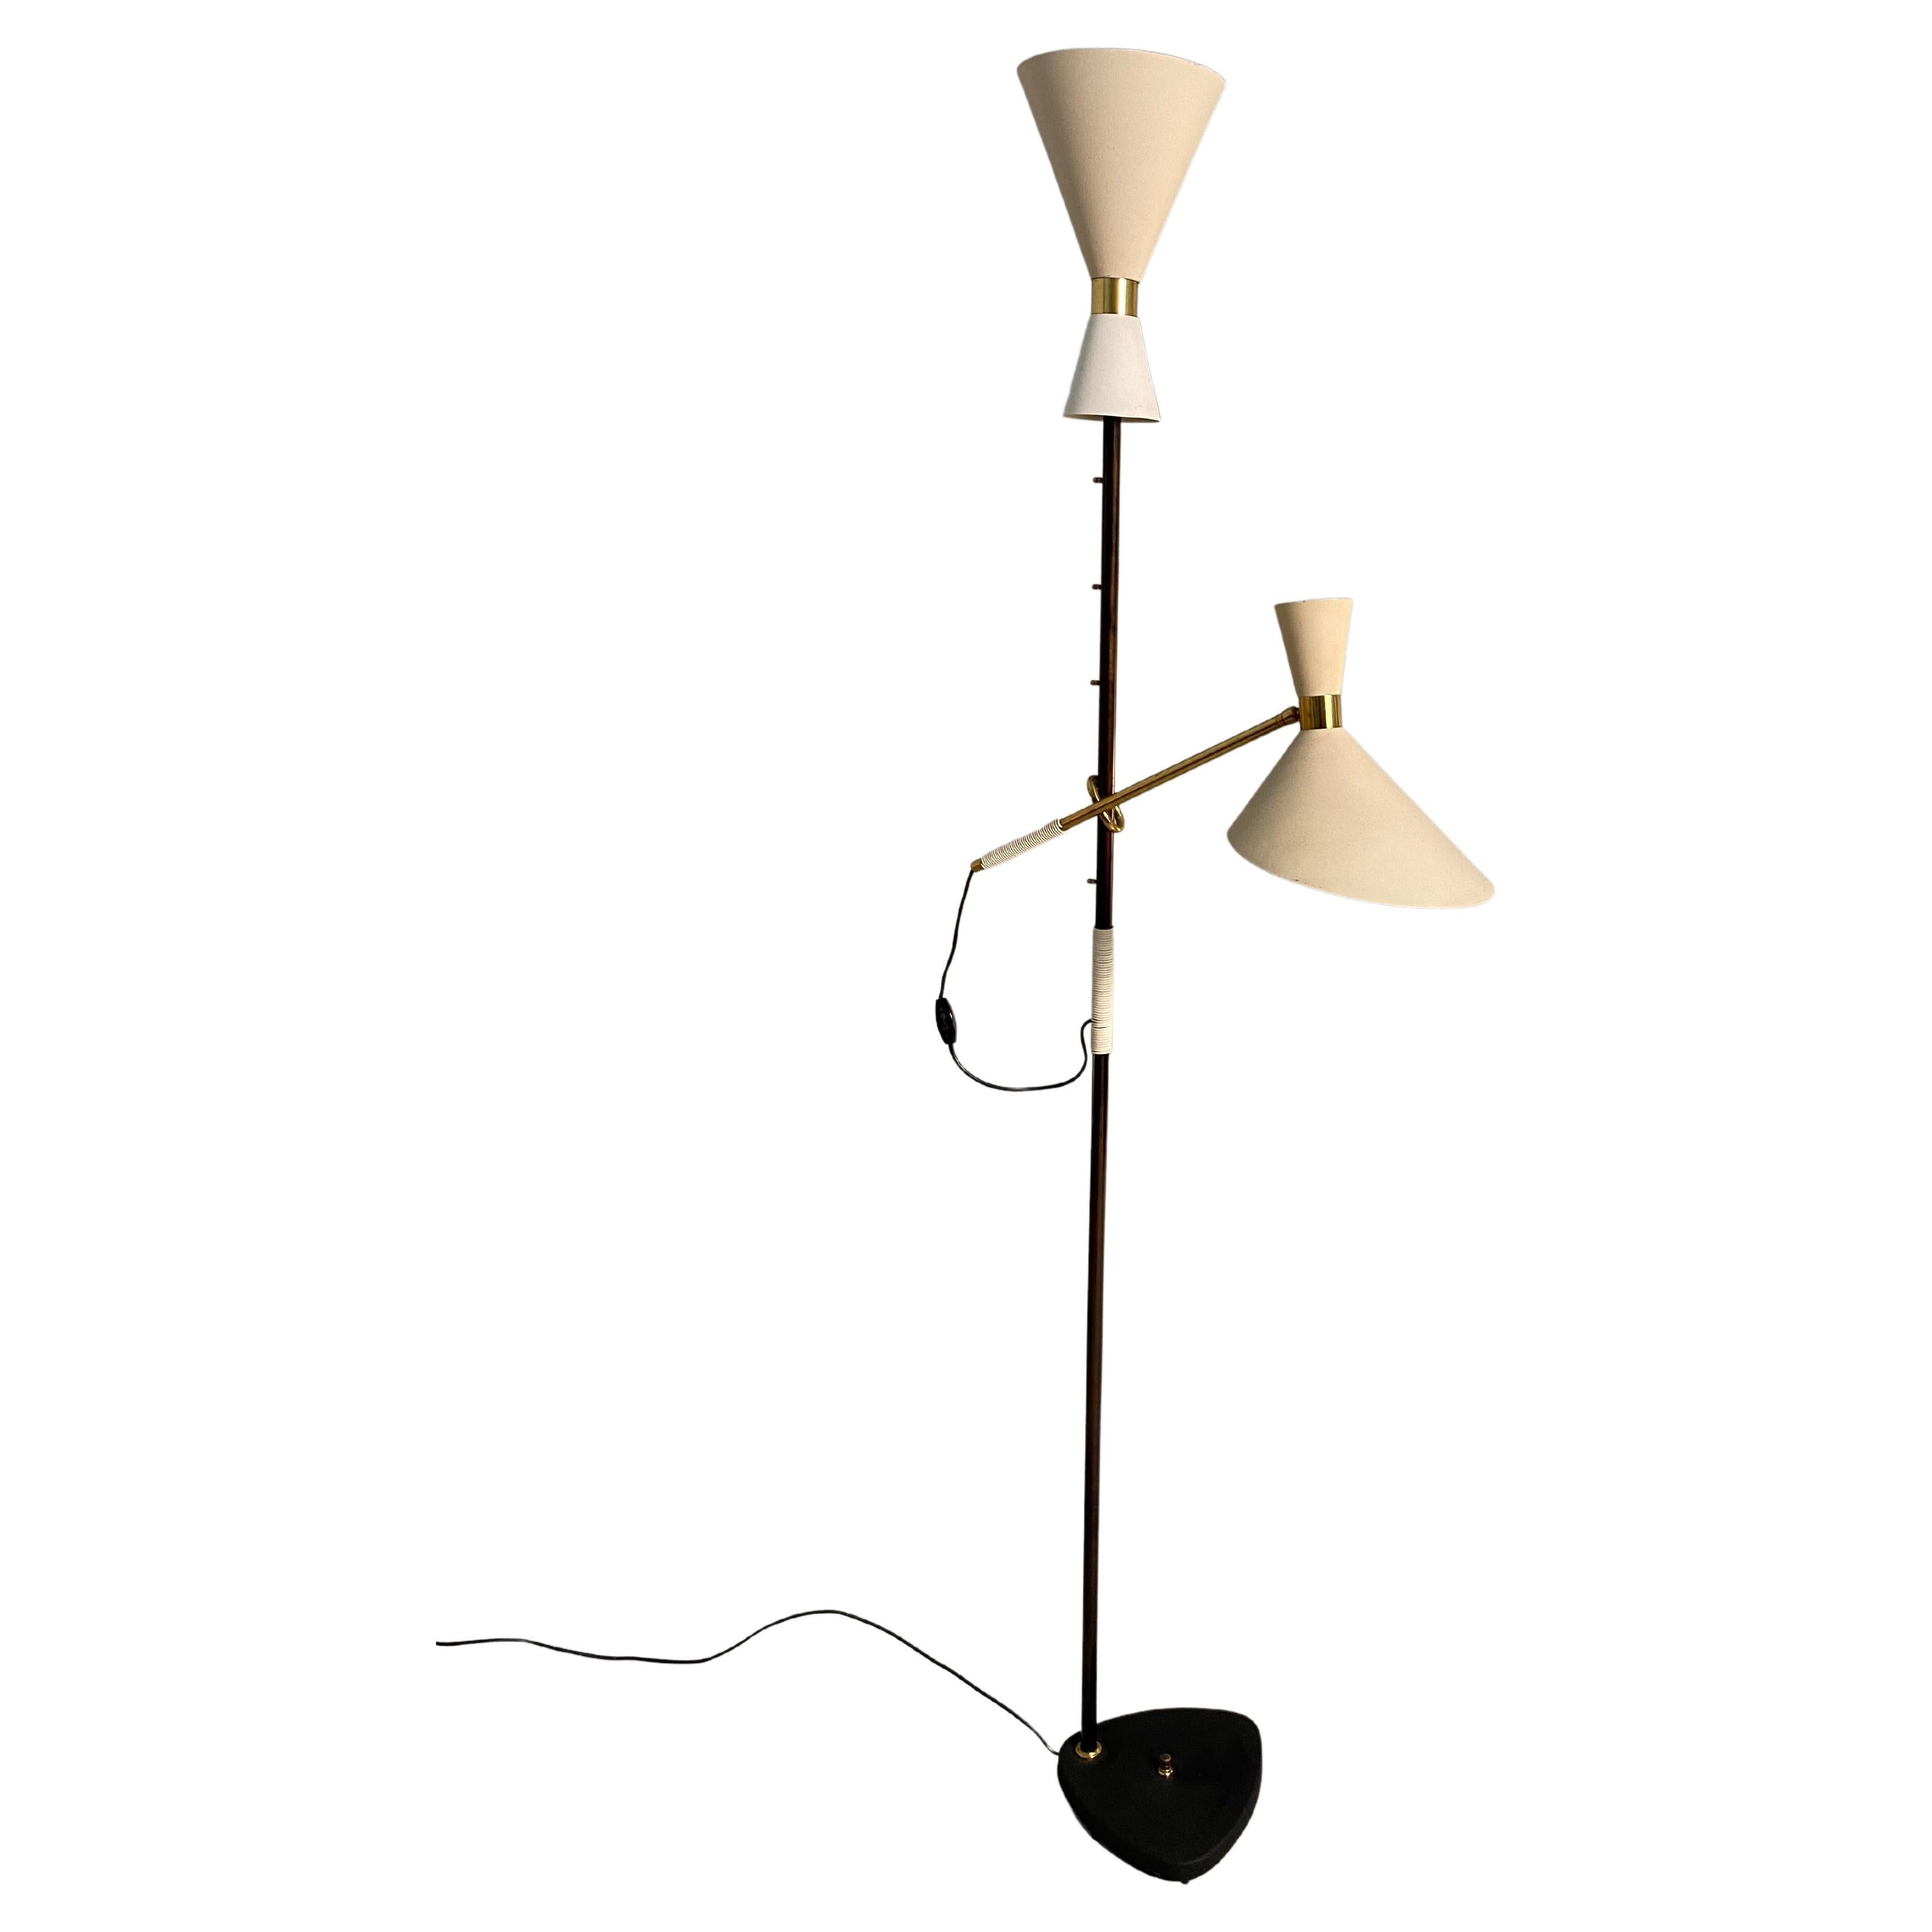 J.T. Kalmar Floor Lamp, Mod. Pelikan 'N. 2097', Metal and Brass, Austria, '50s